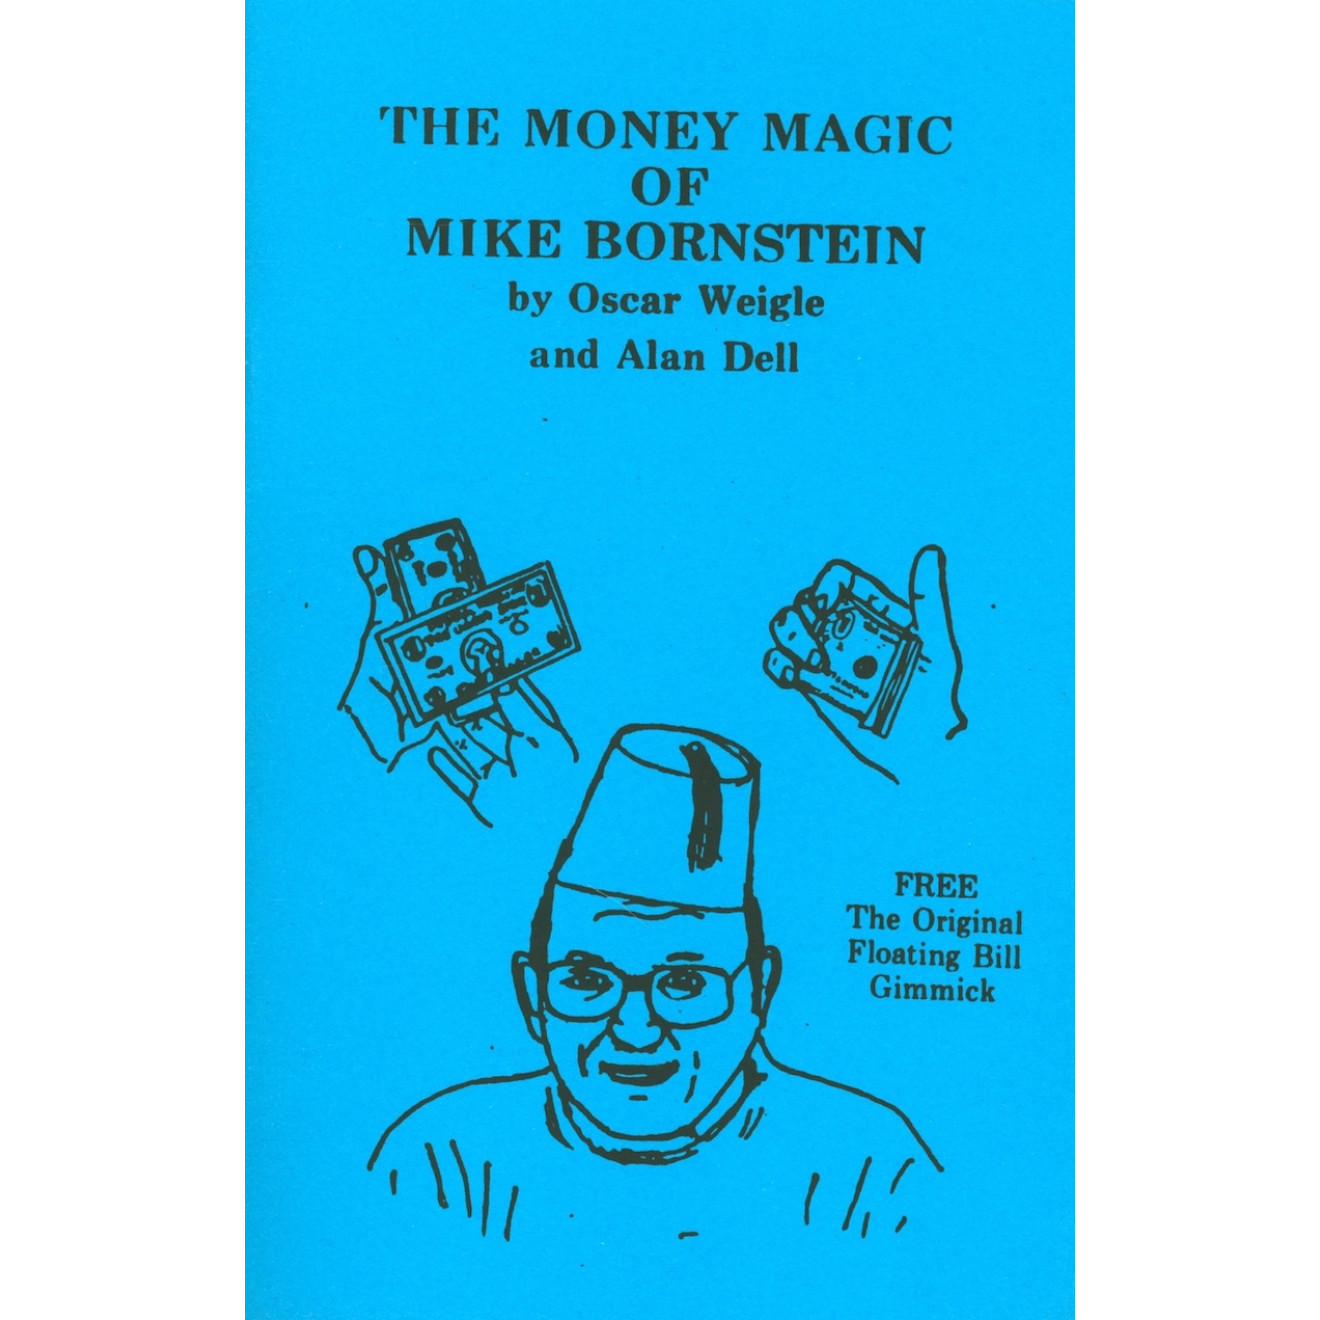 The Money Magic of Mike Bornstein